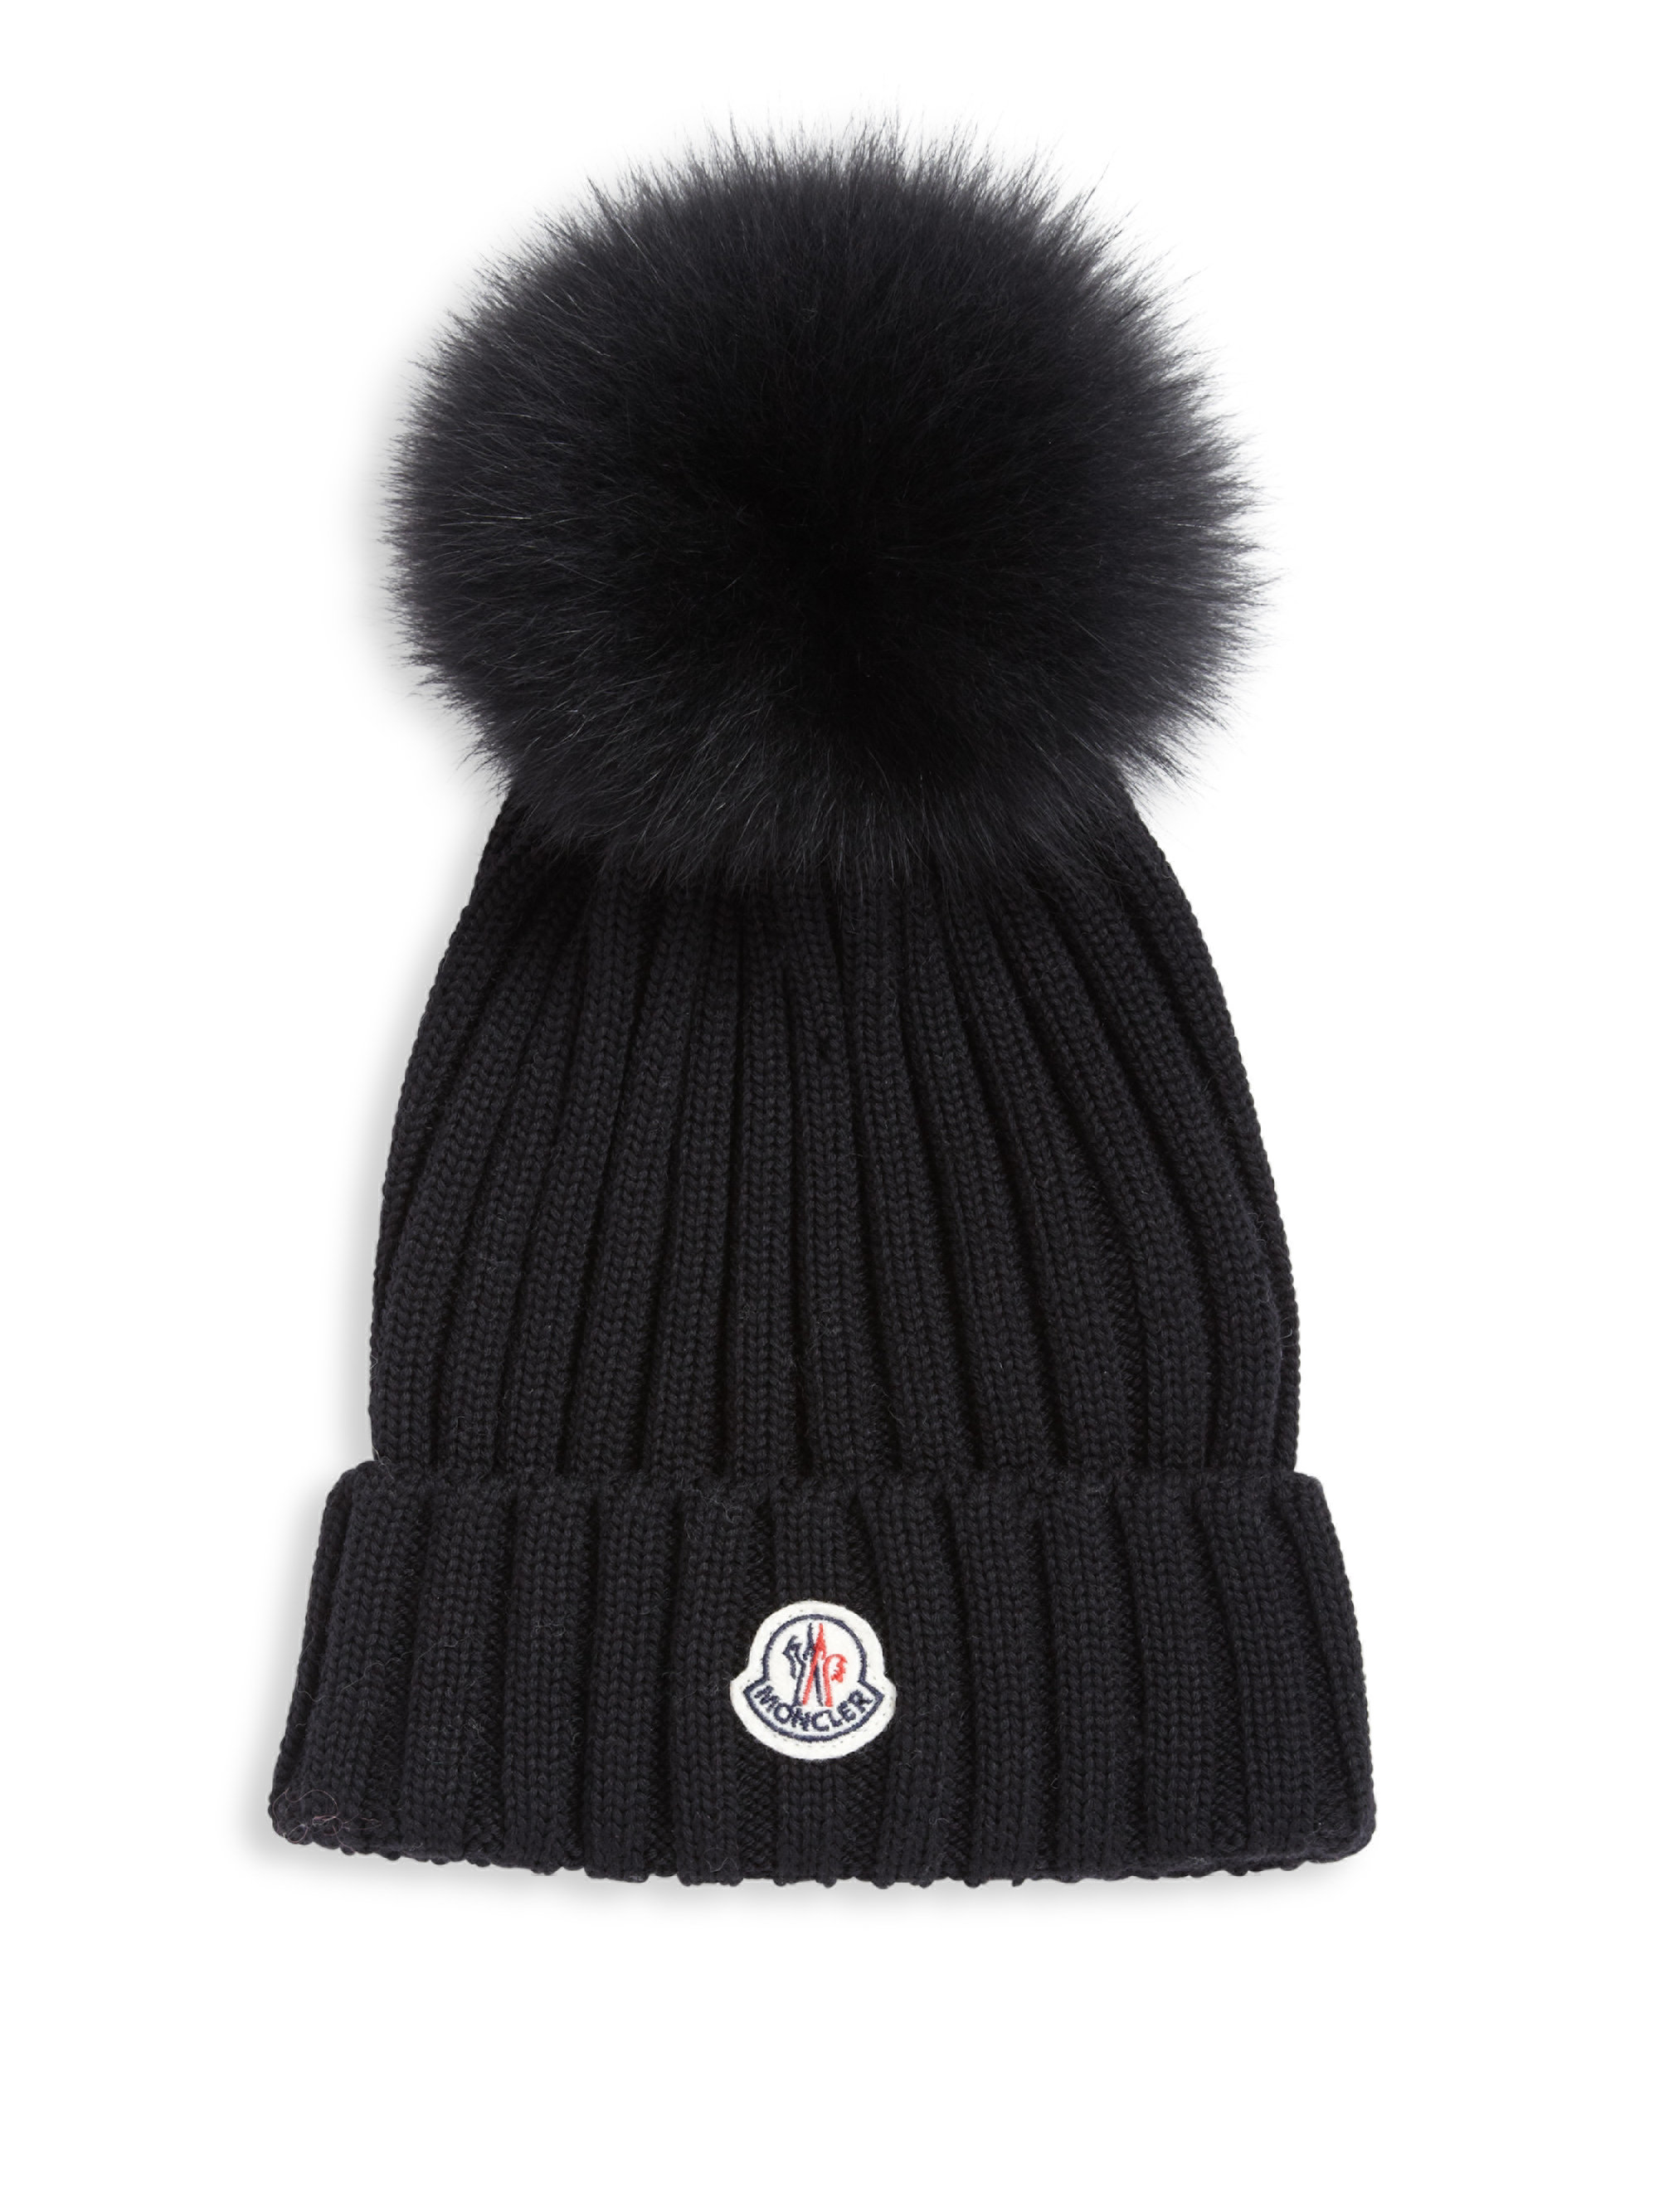 Moncler Berretto Rib-knit Wool & Fur Pompom Hat in Black - Save 62% | Lyst